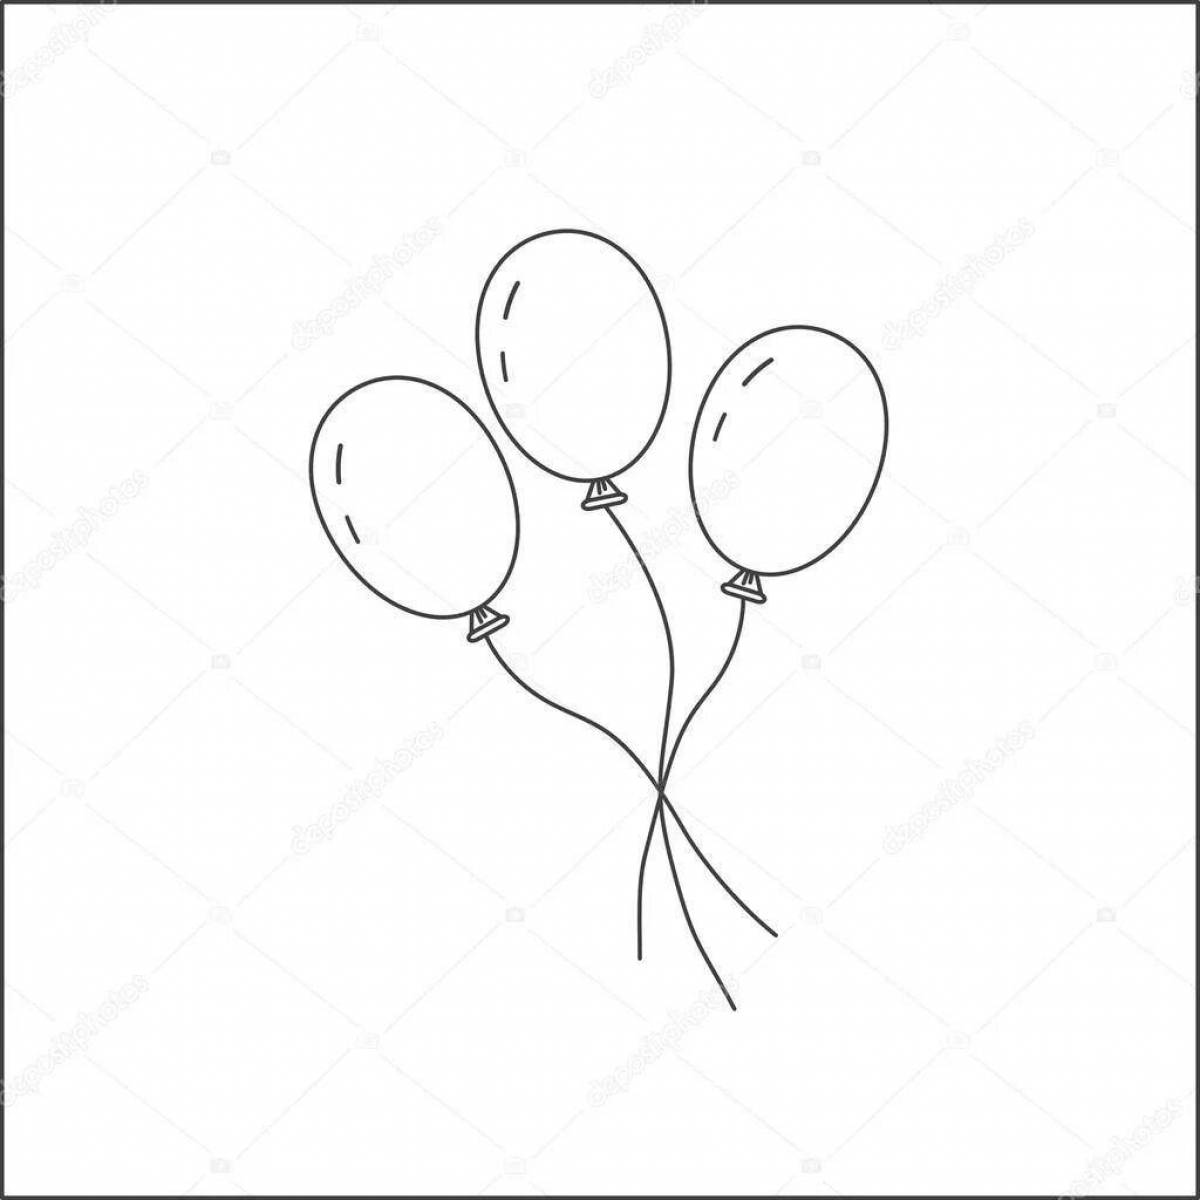 Glitter balloons for children 2-3 years old